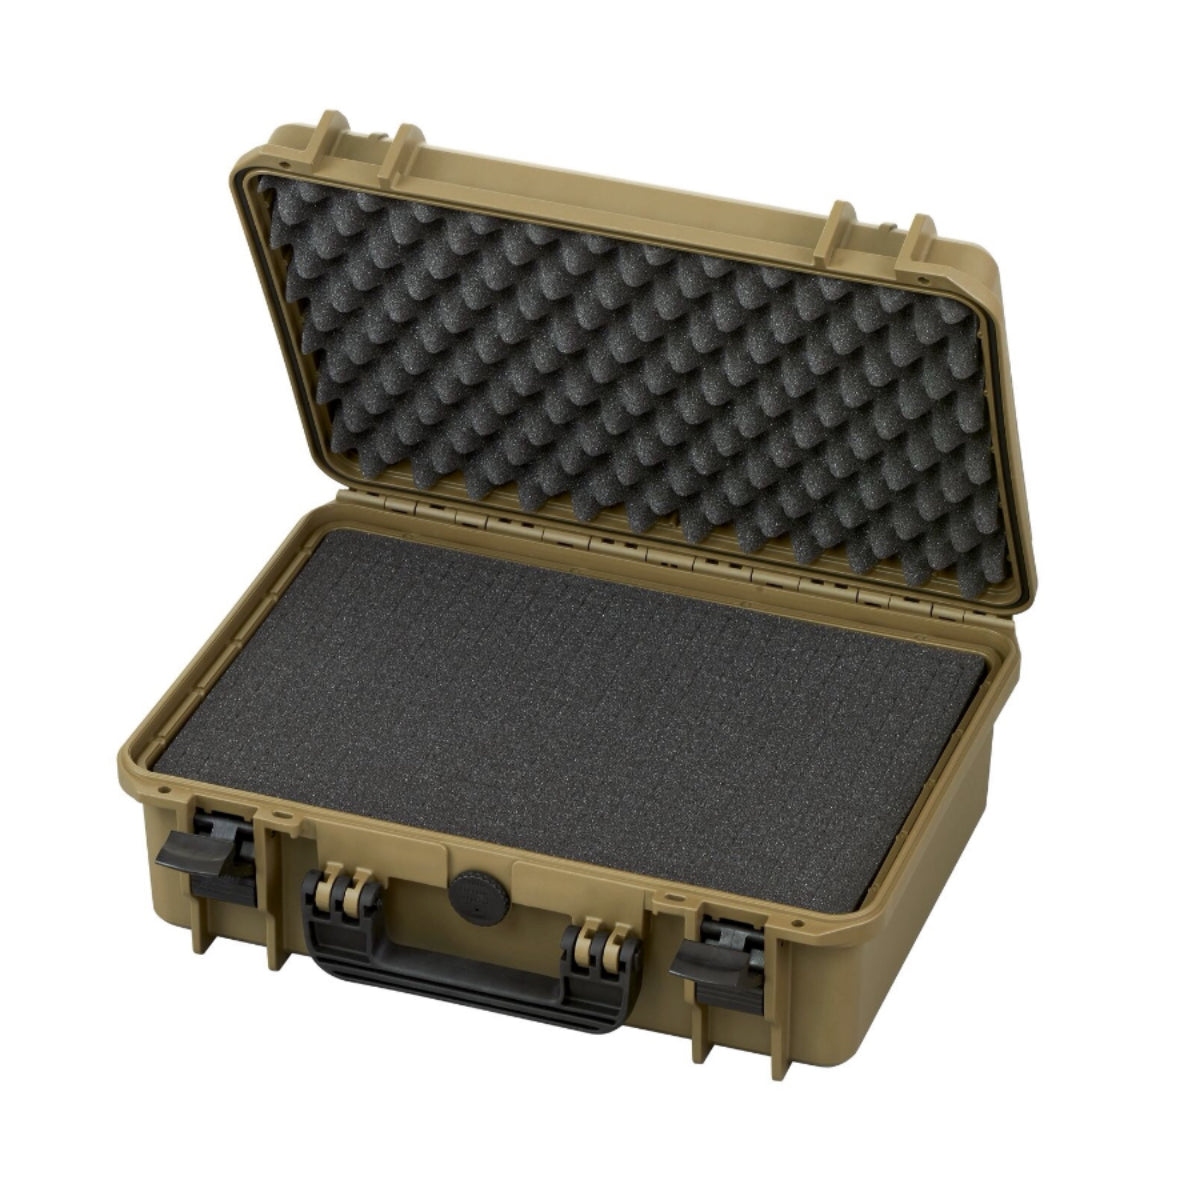 SP PRO 430S Sahara Carry Case, Cubed Foam, ID: L426xW290xH159mm